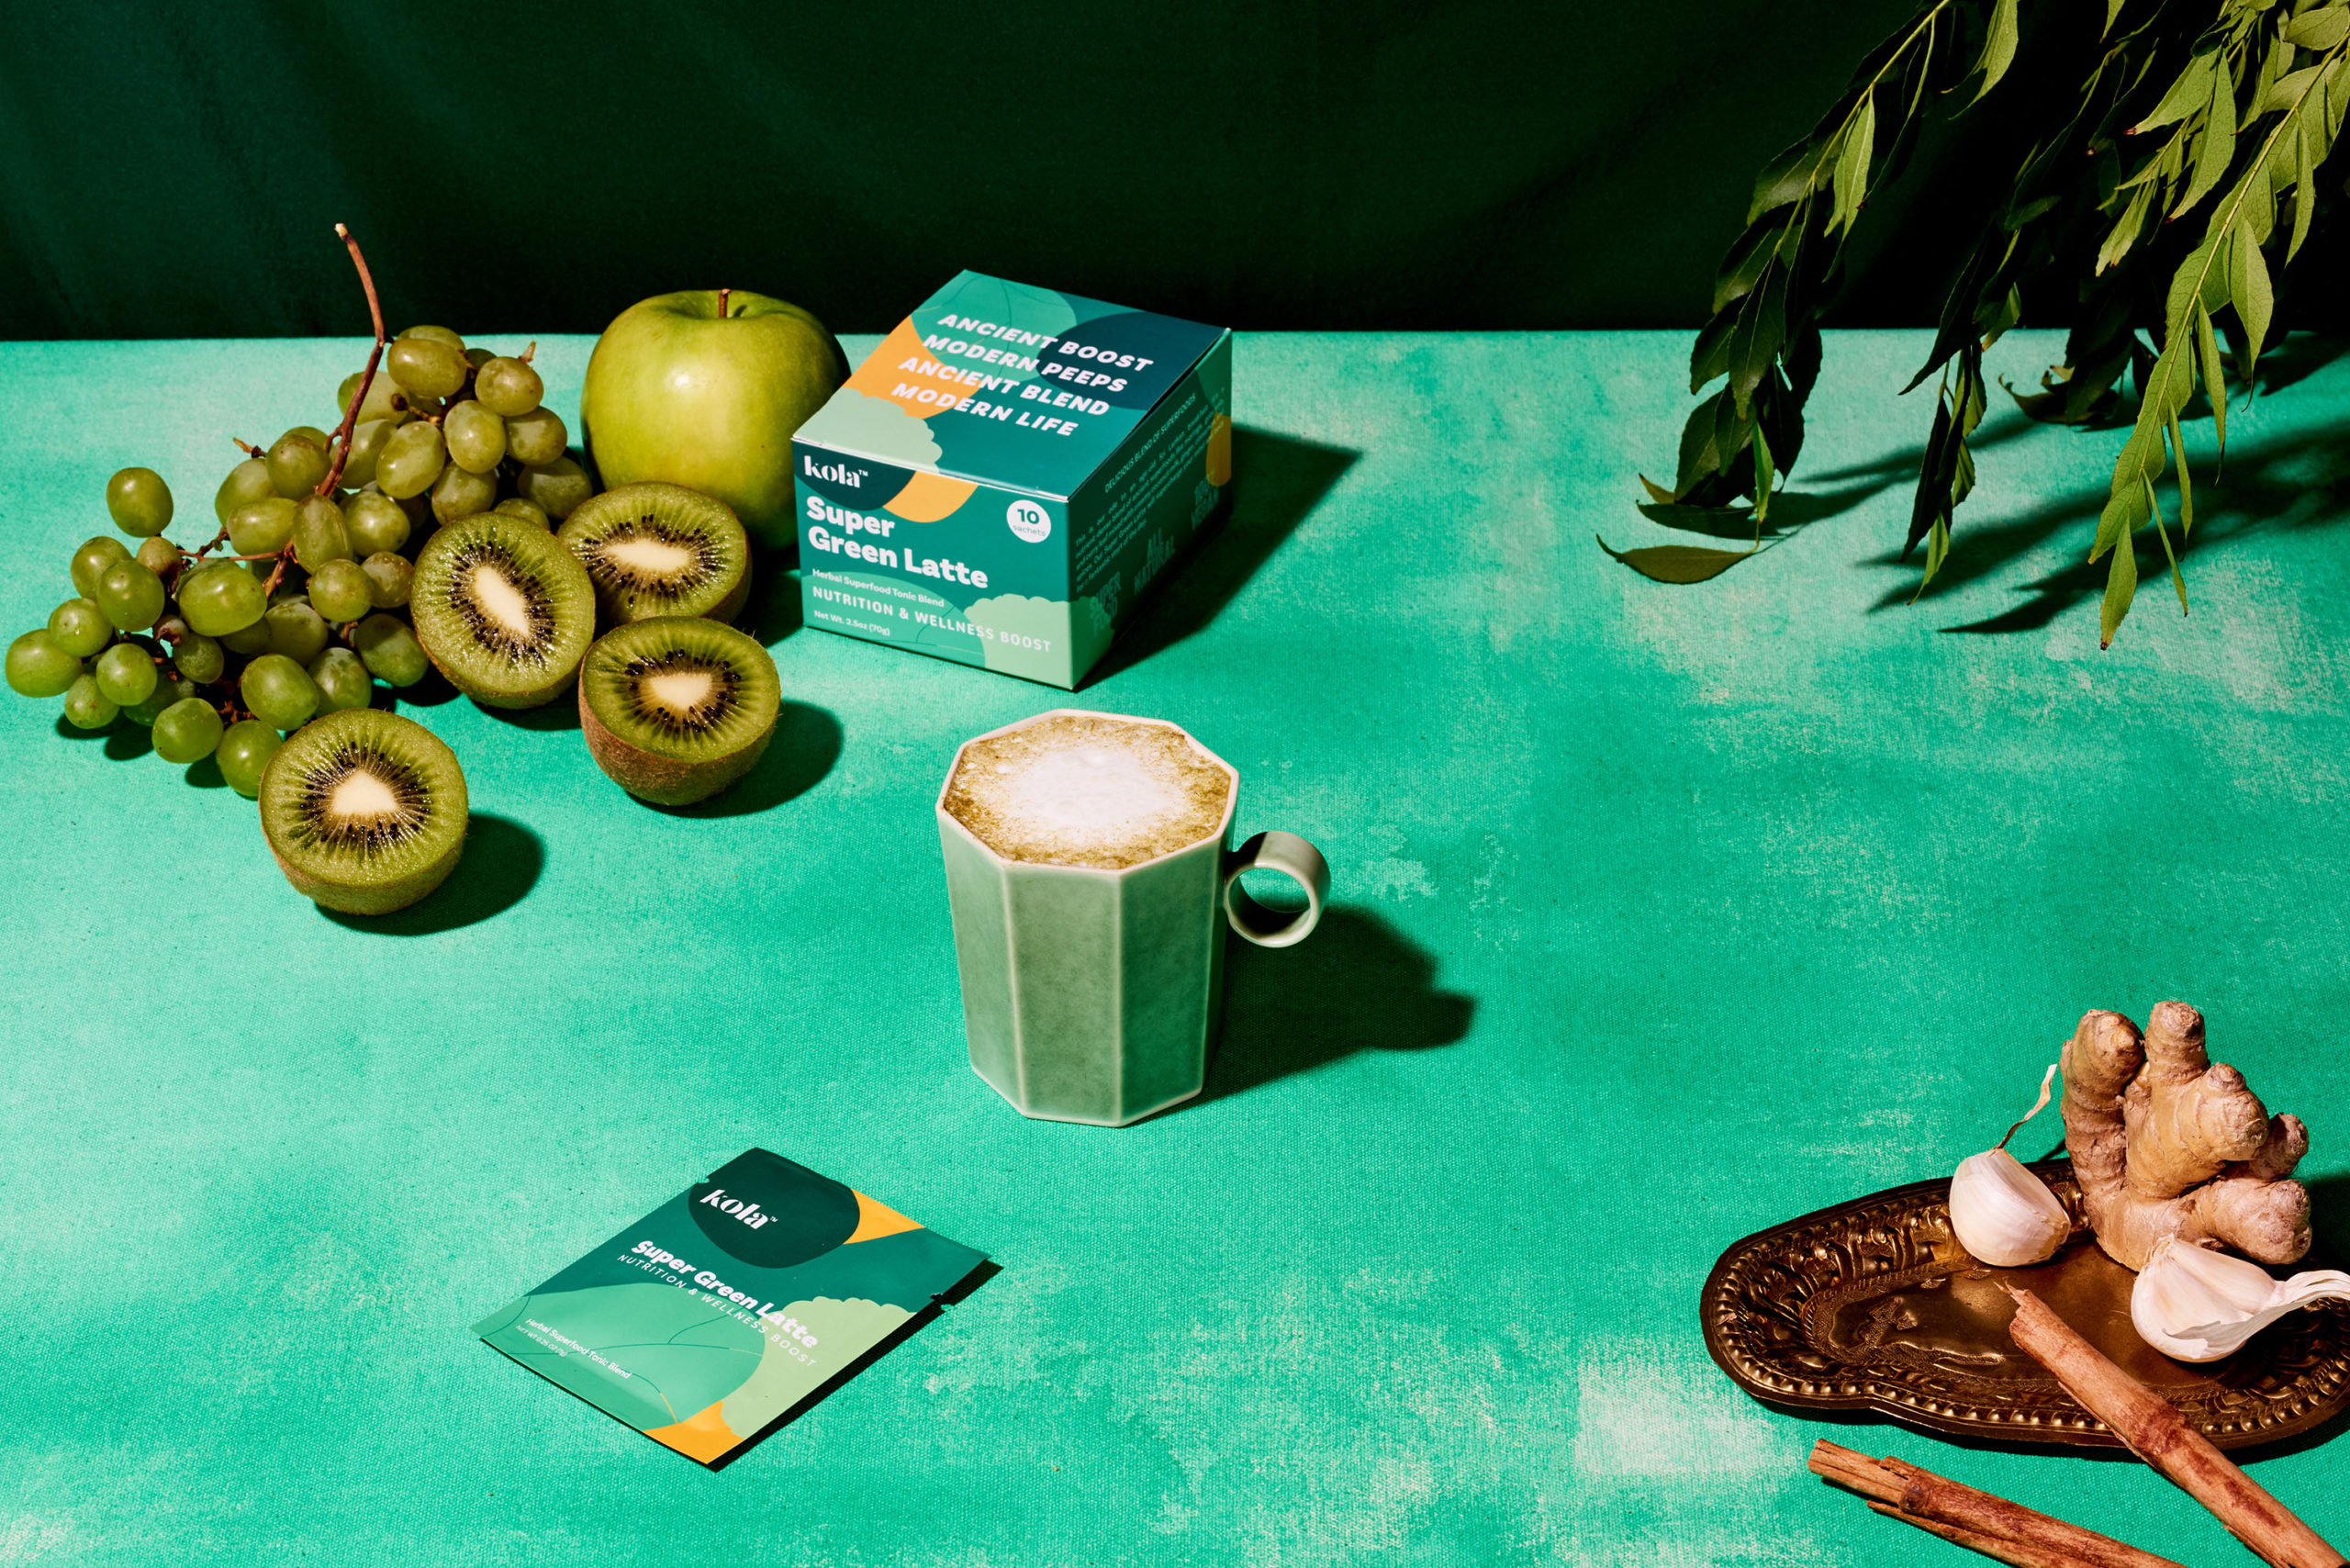 Kola – Super Green Latte v.2 web